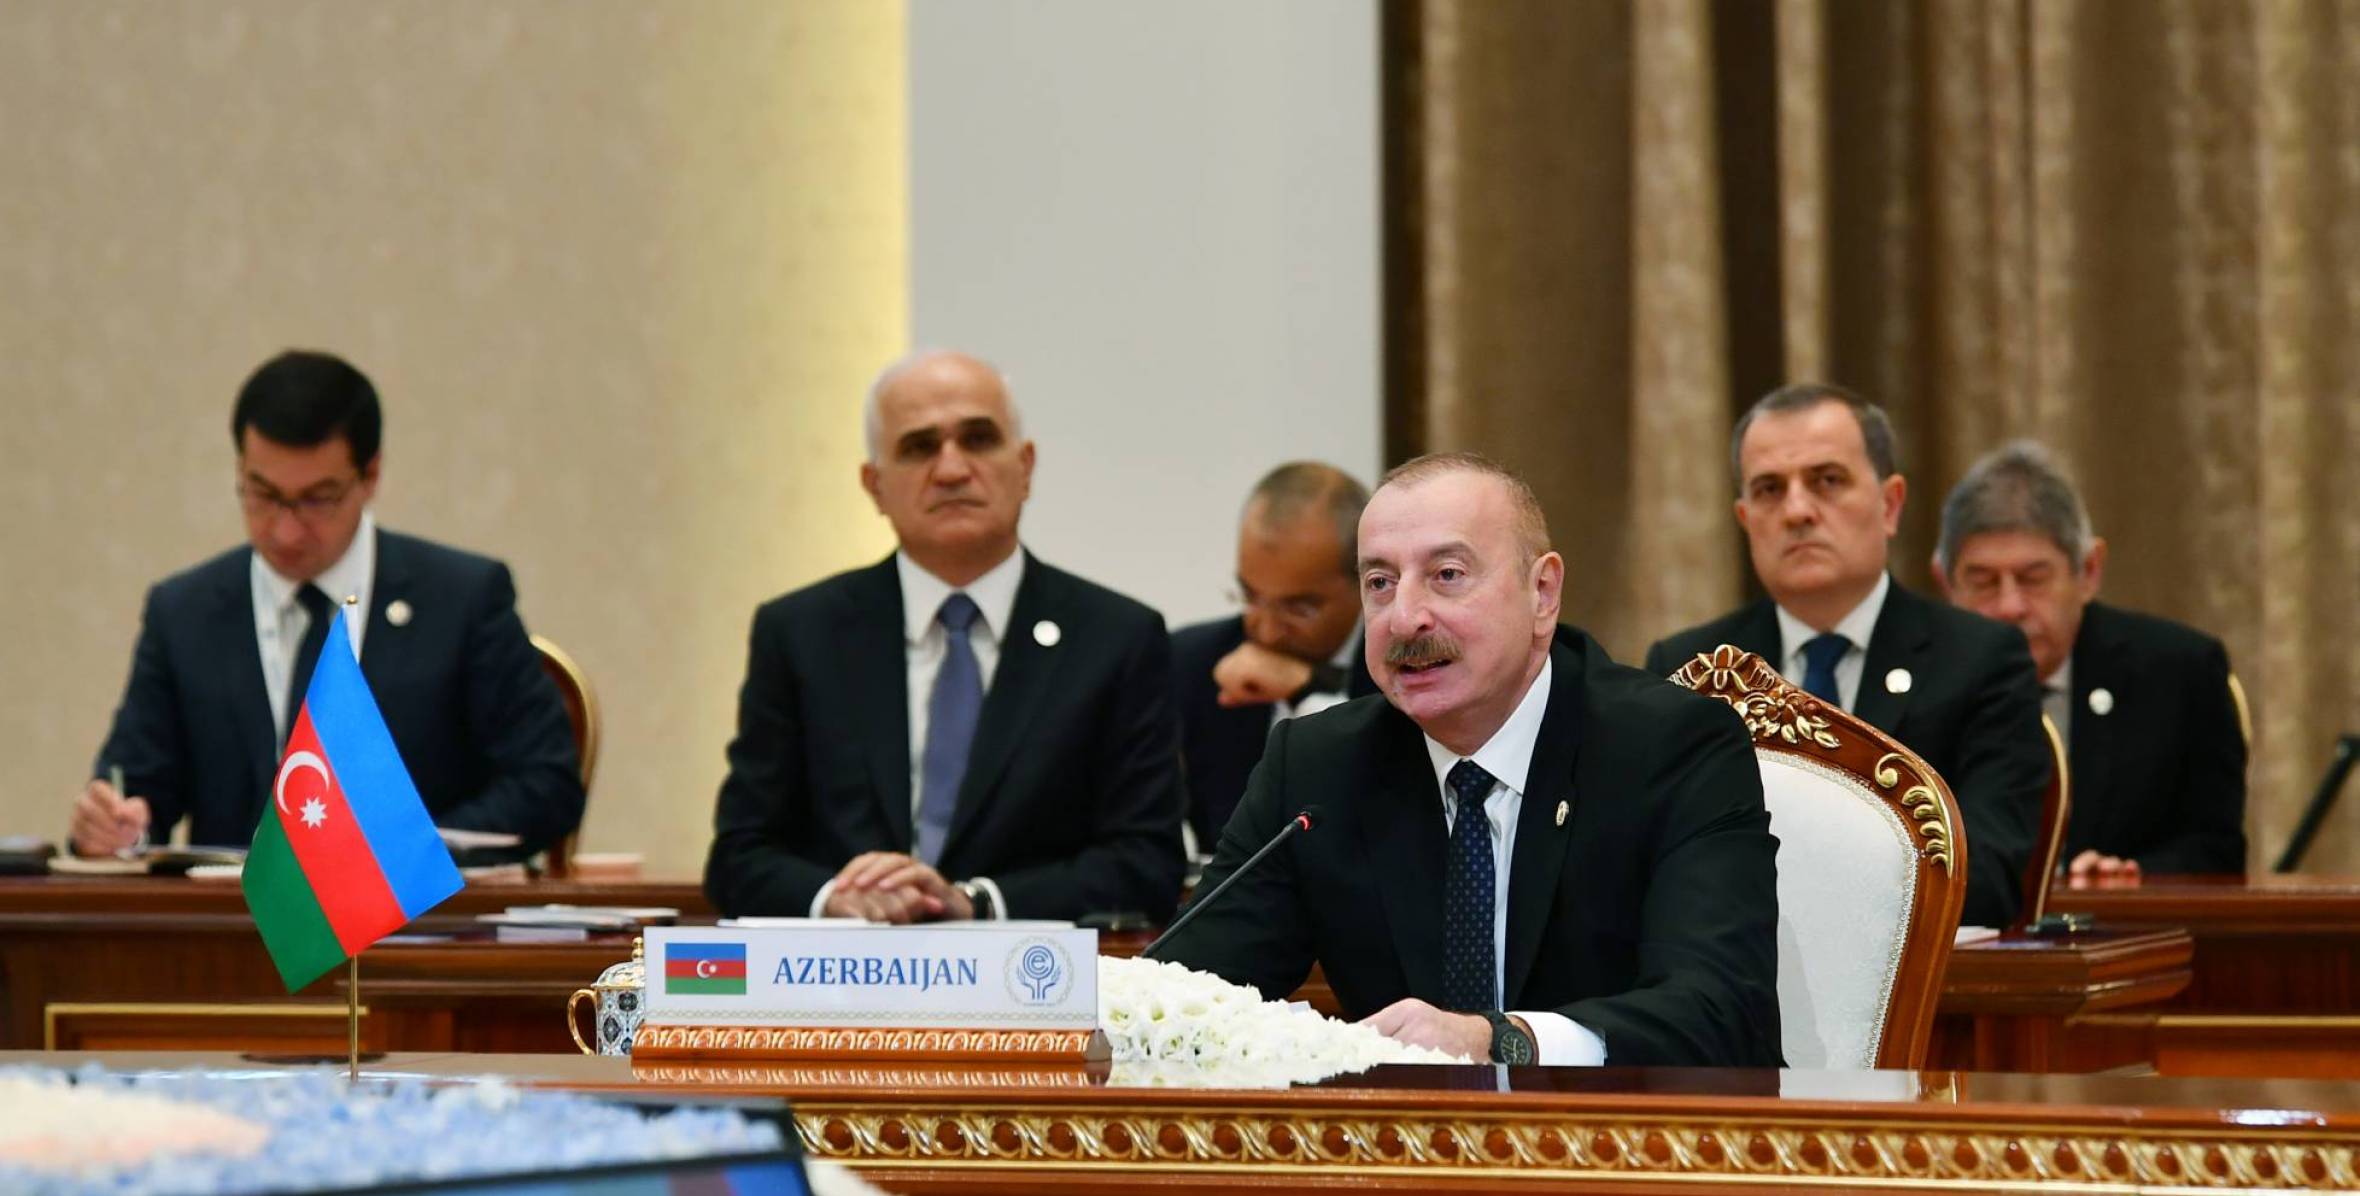 Speech by Ilham Aliyev at the 16th Summit of Economic Cooperation Organization gets underway in Tashkent